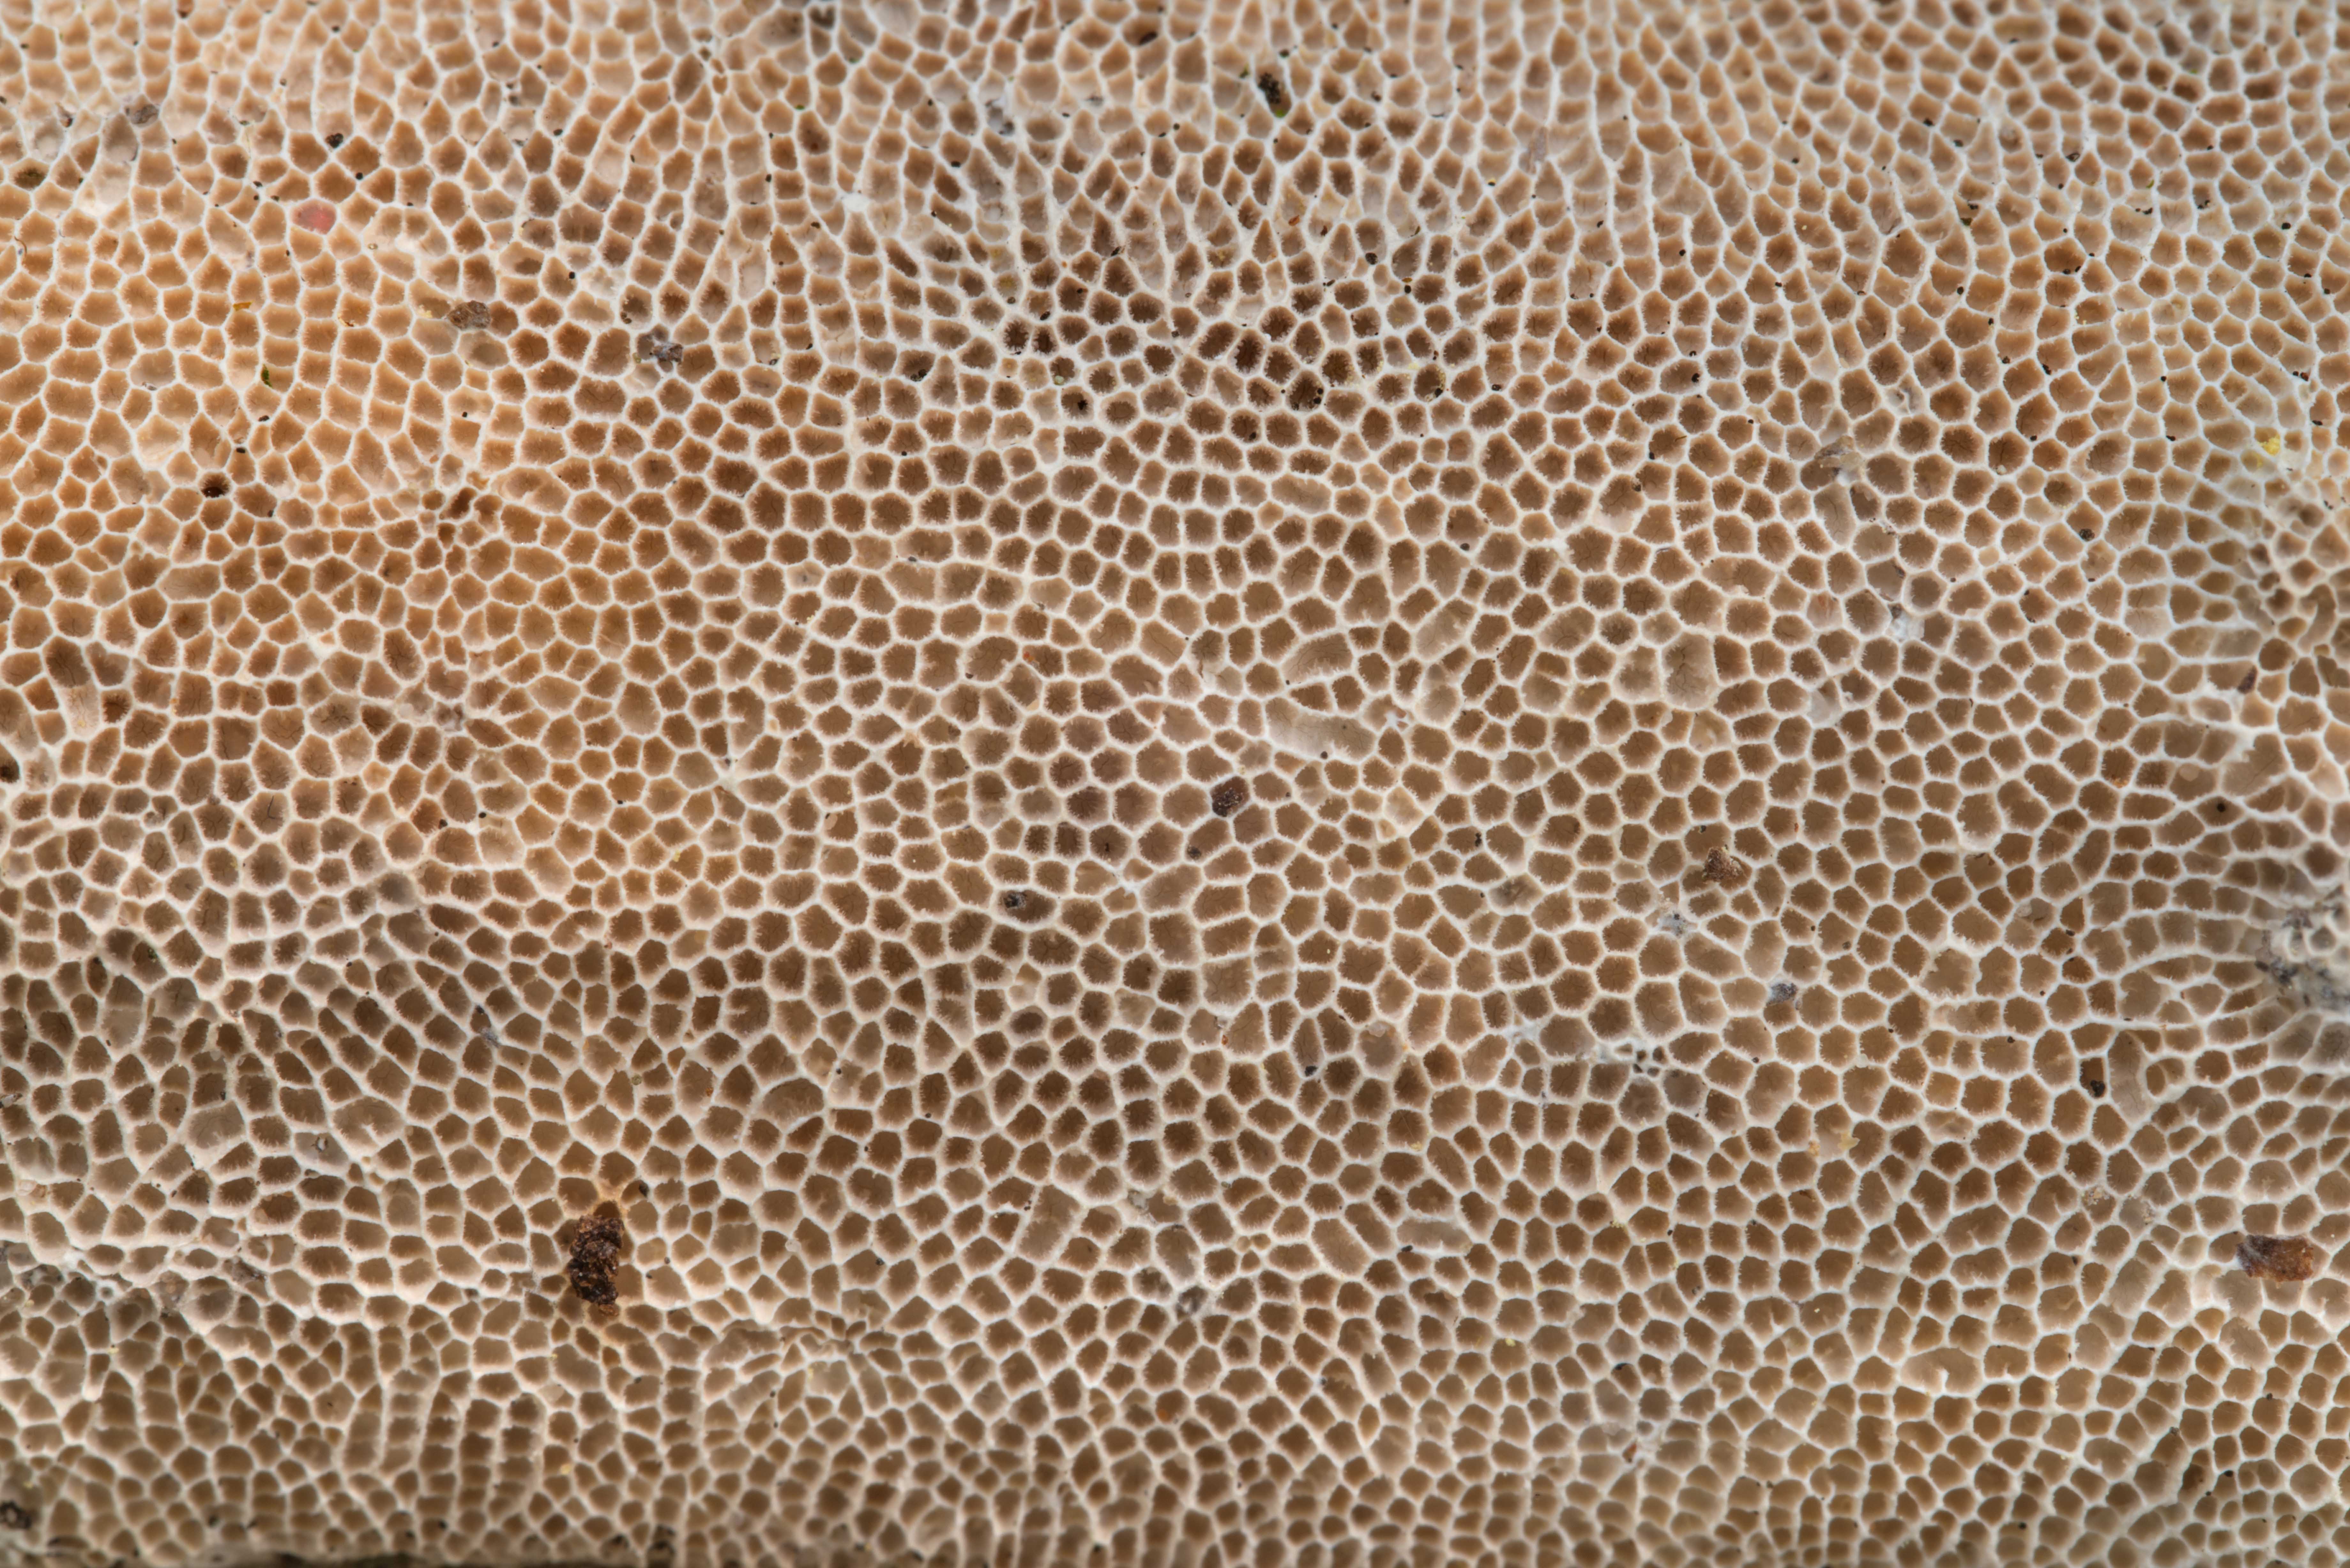 Photo 2234-27: Texture of a porous mushroom Trametes villosa on ...